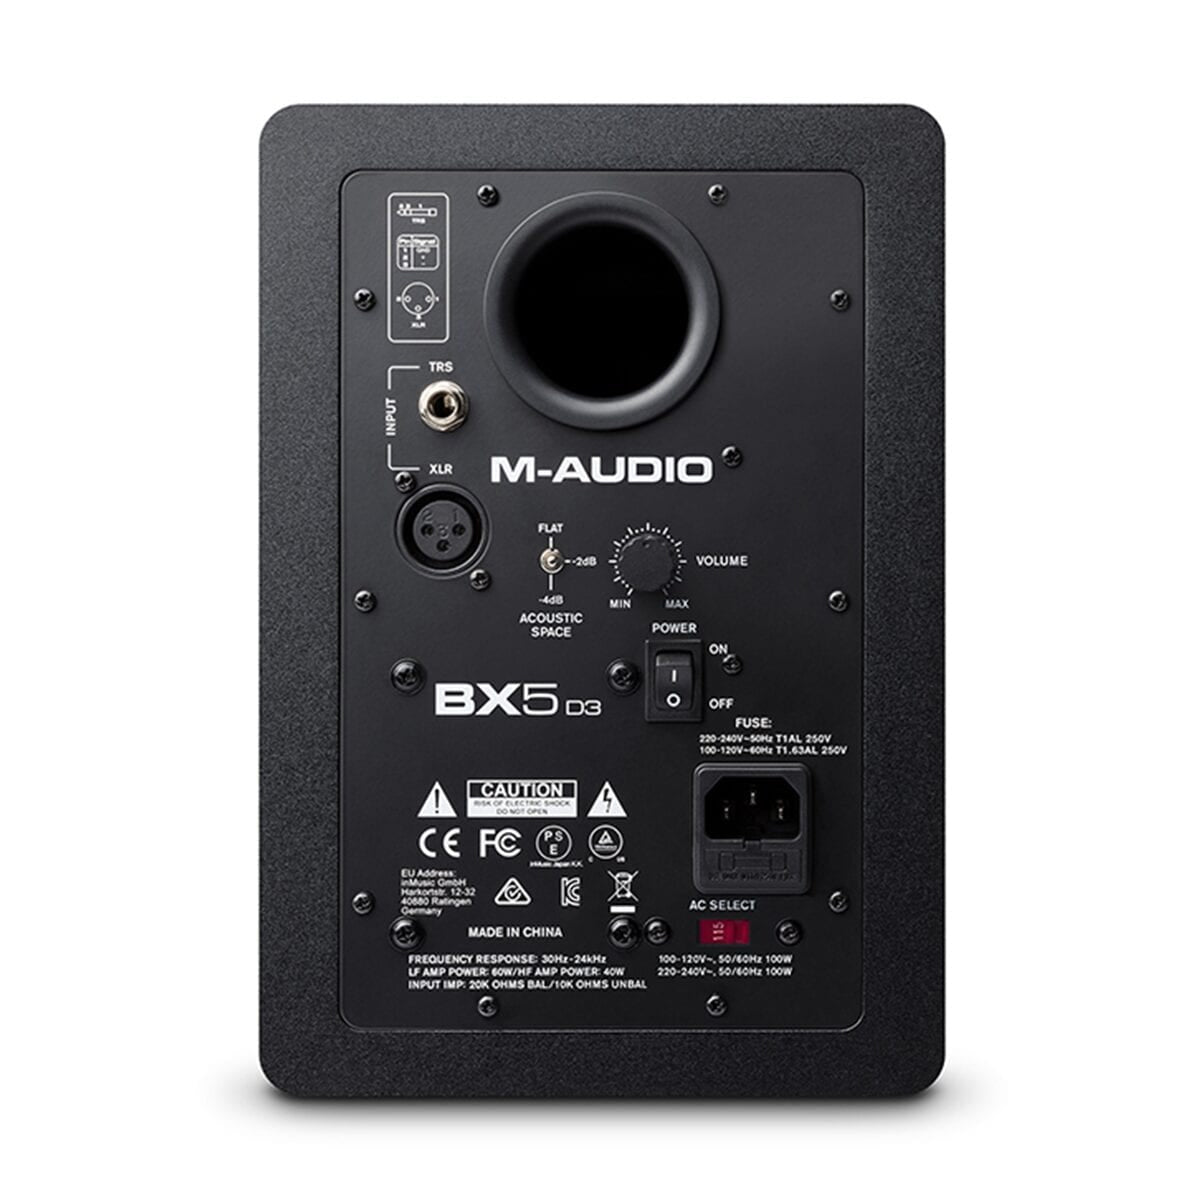 M-Audio BX5D3 Studio Monitor Each